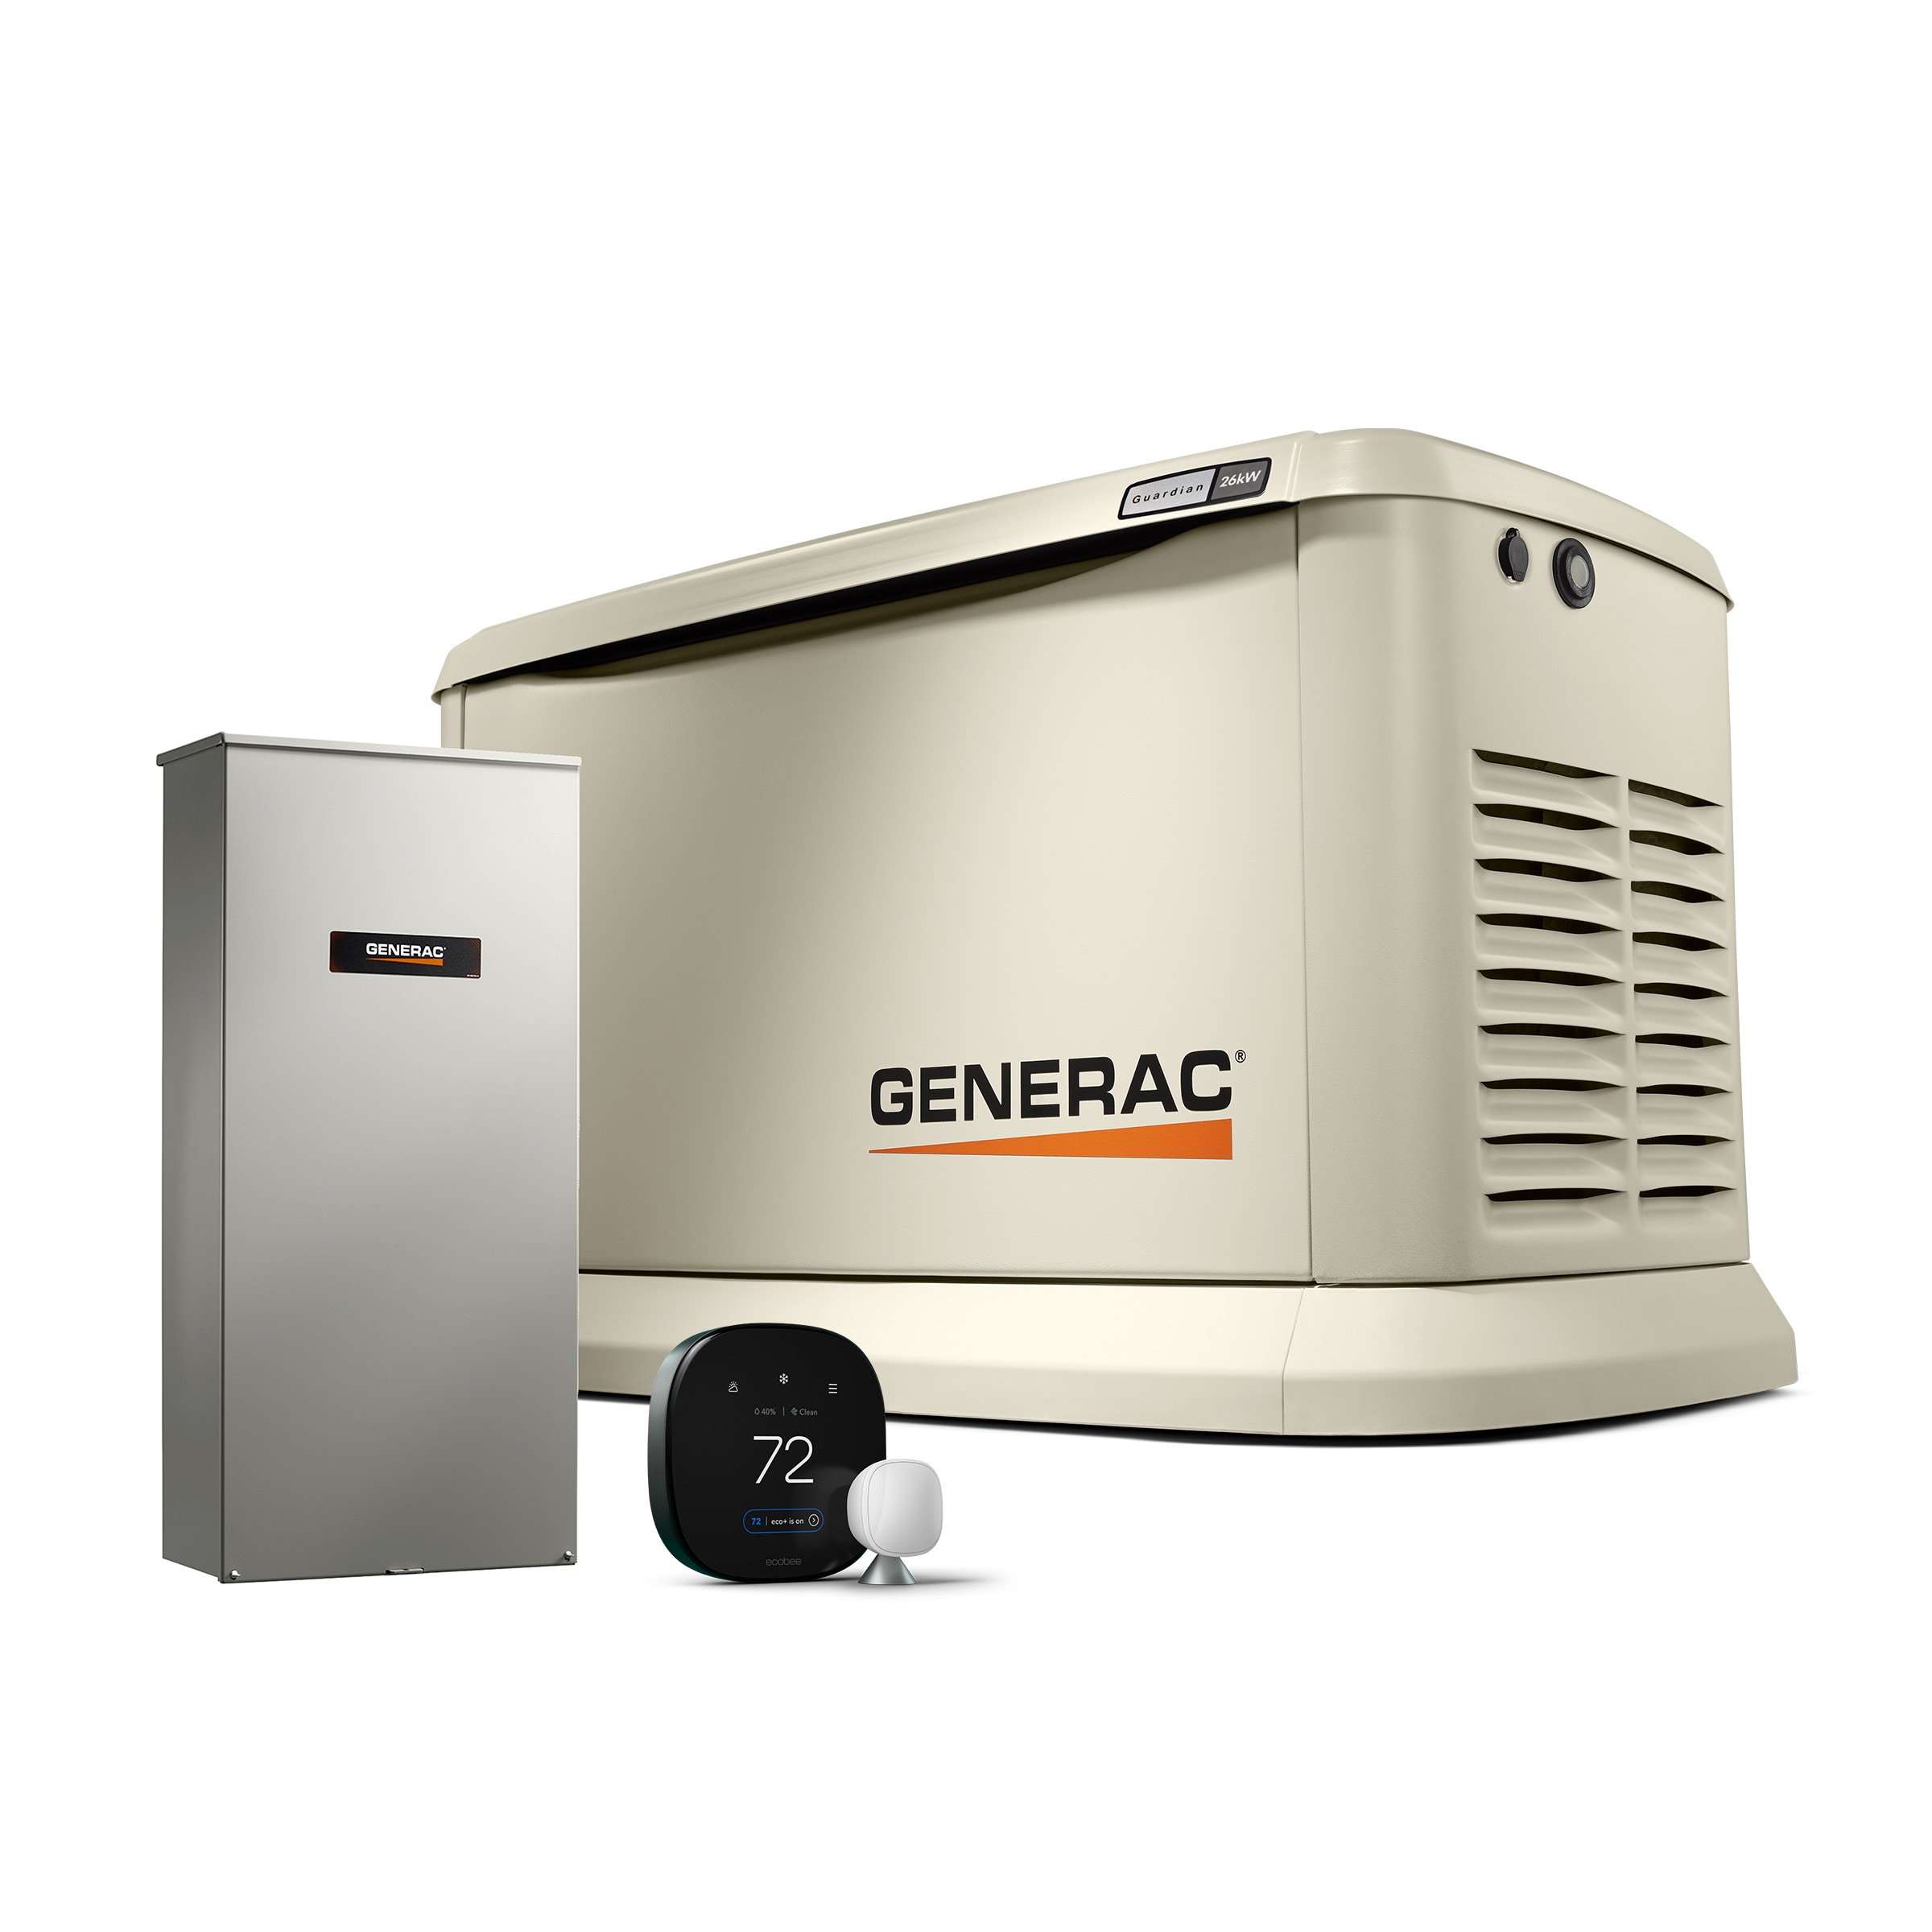 Generac 26kW Home Standby Generator + ecobee Smart Thermostat Premium Bundle